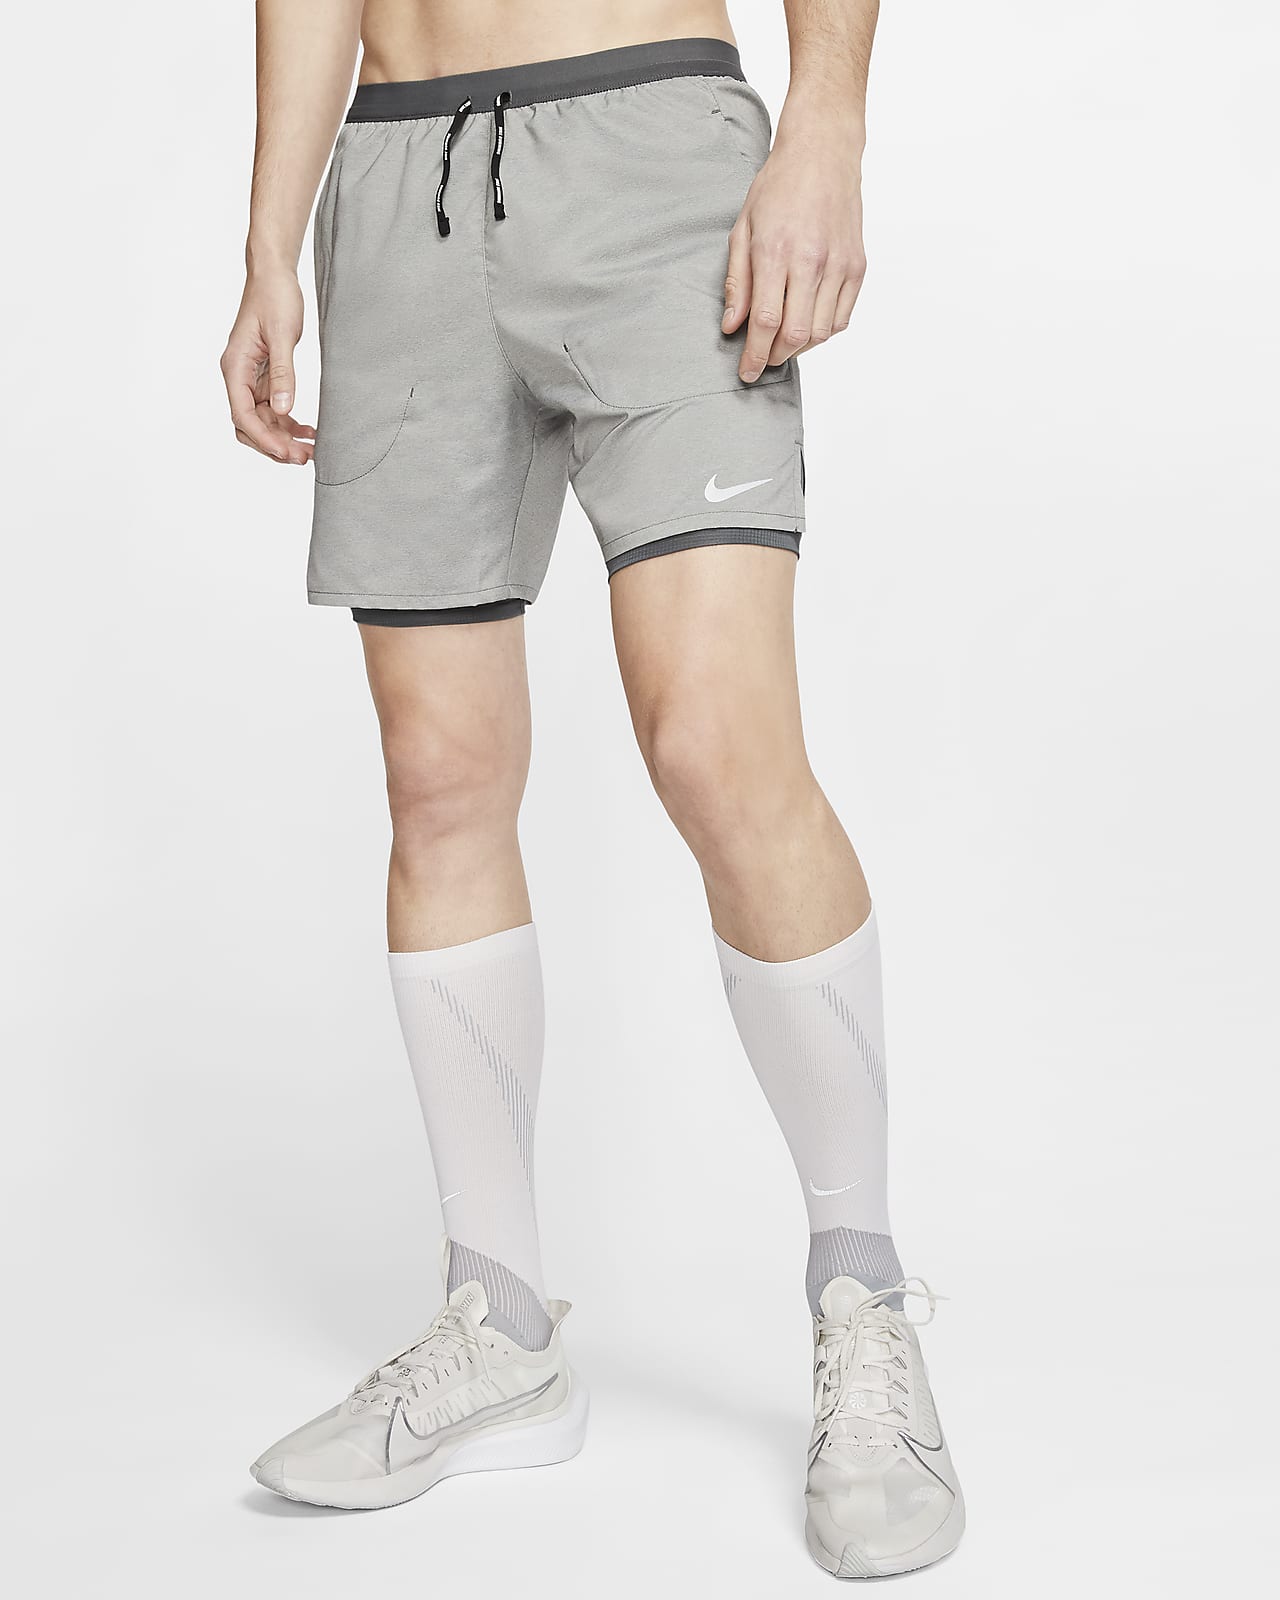 Shorts de running 2 en 1 de 18 cm para hombre Nike Flex Stride